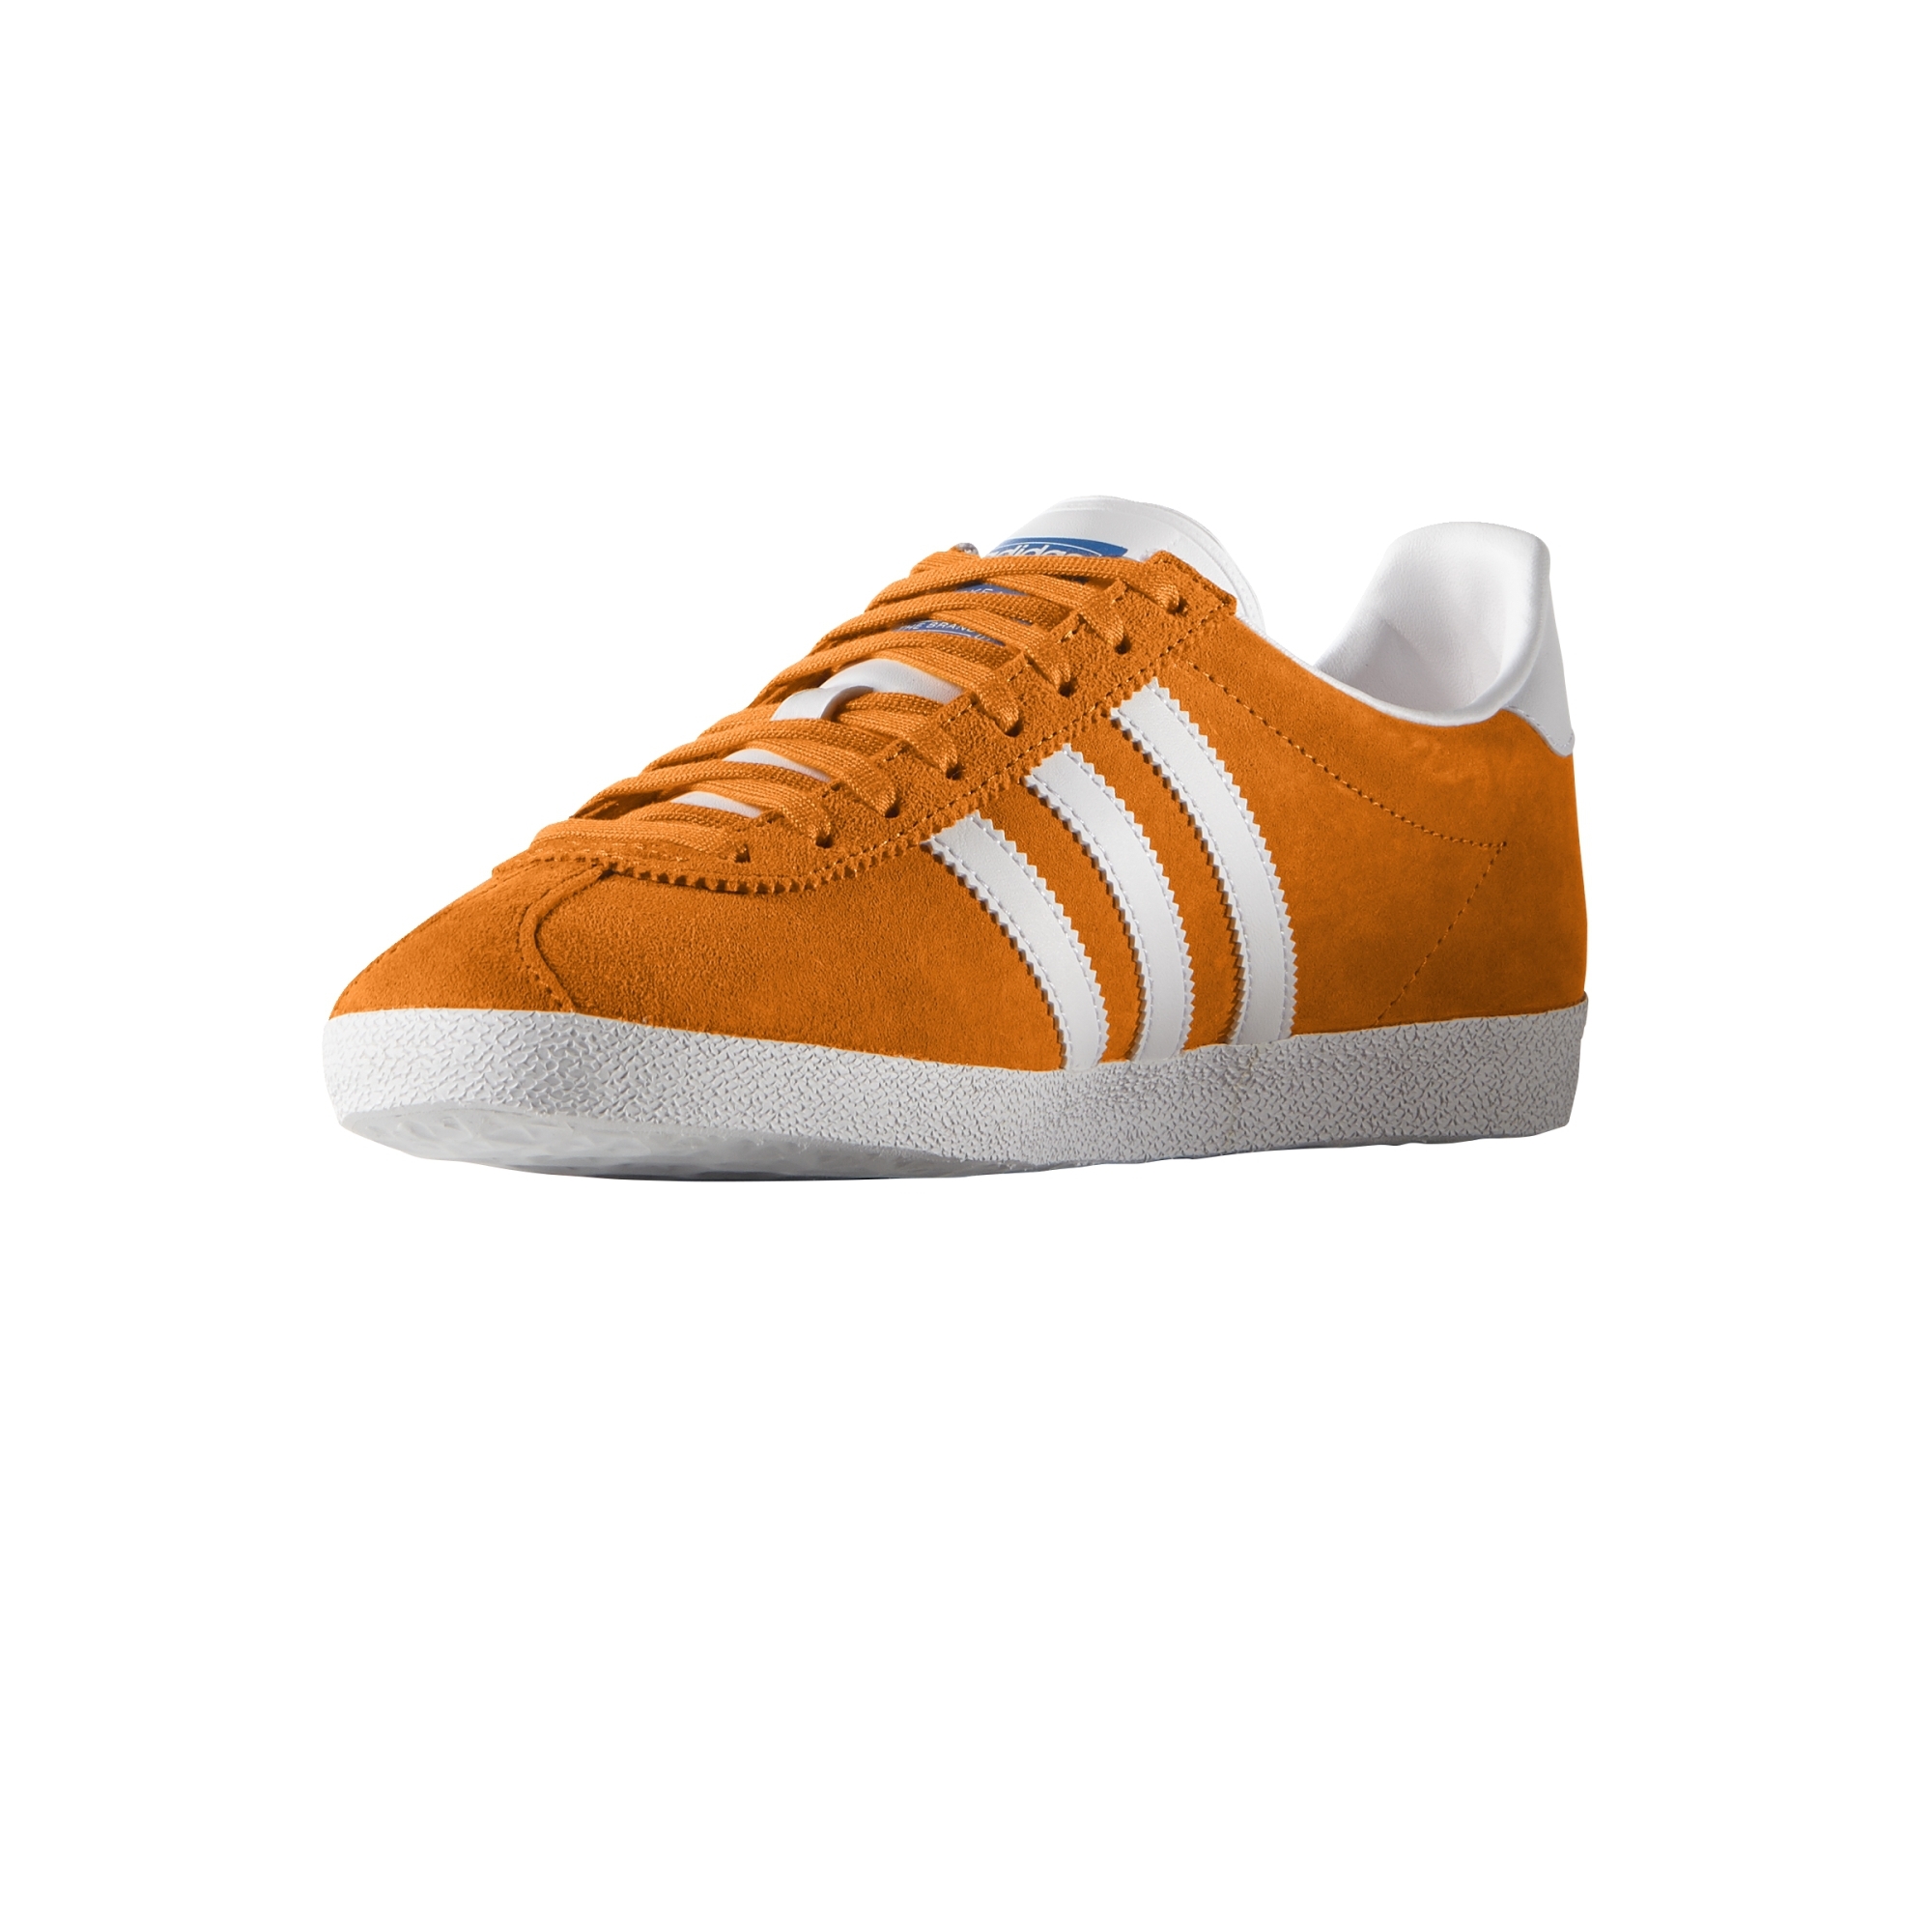 Adidas Originals Gazelle OG (naranja/blanco)